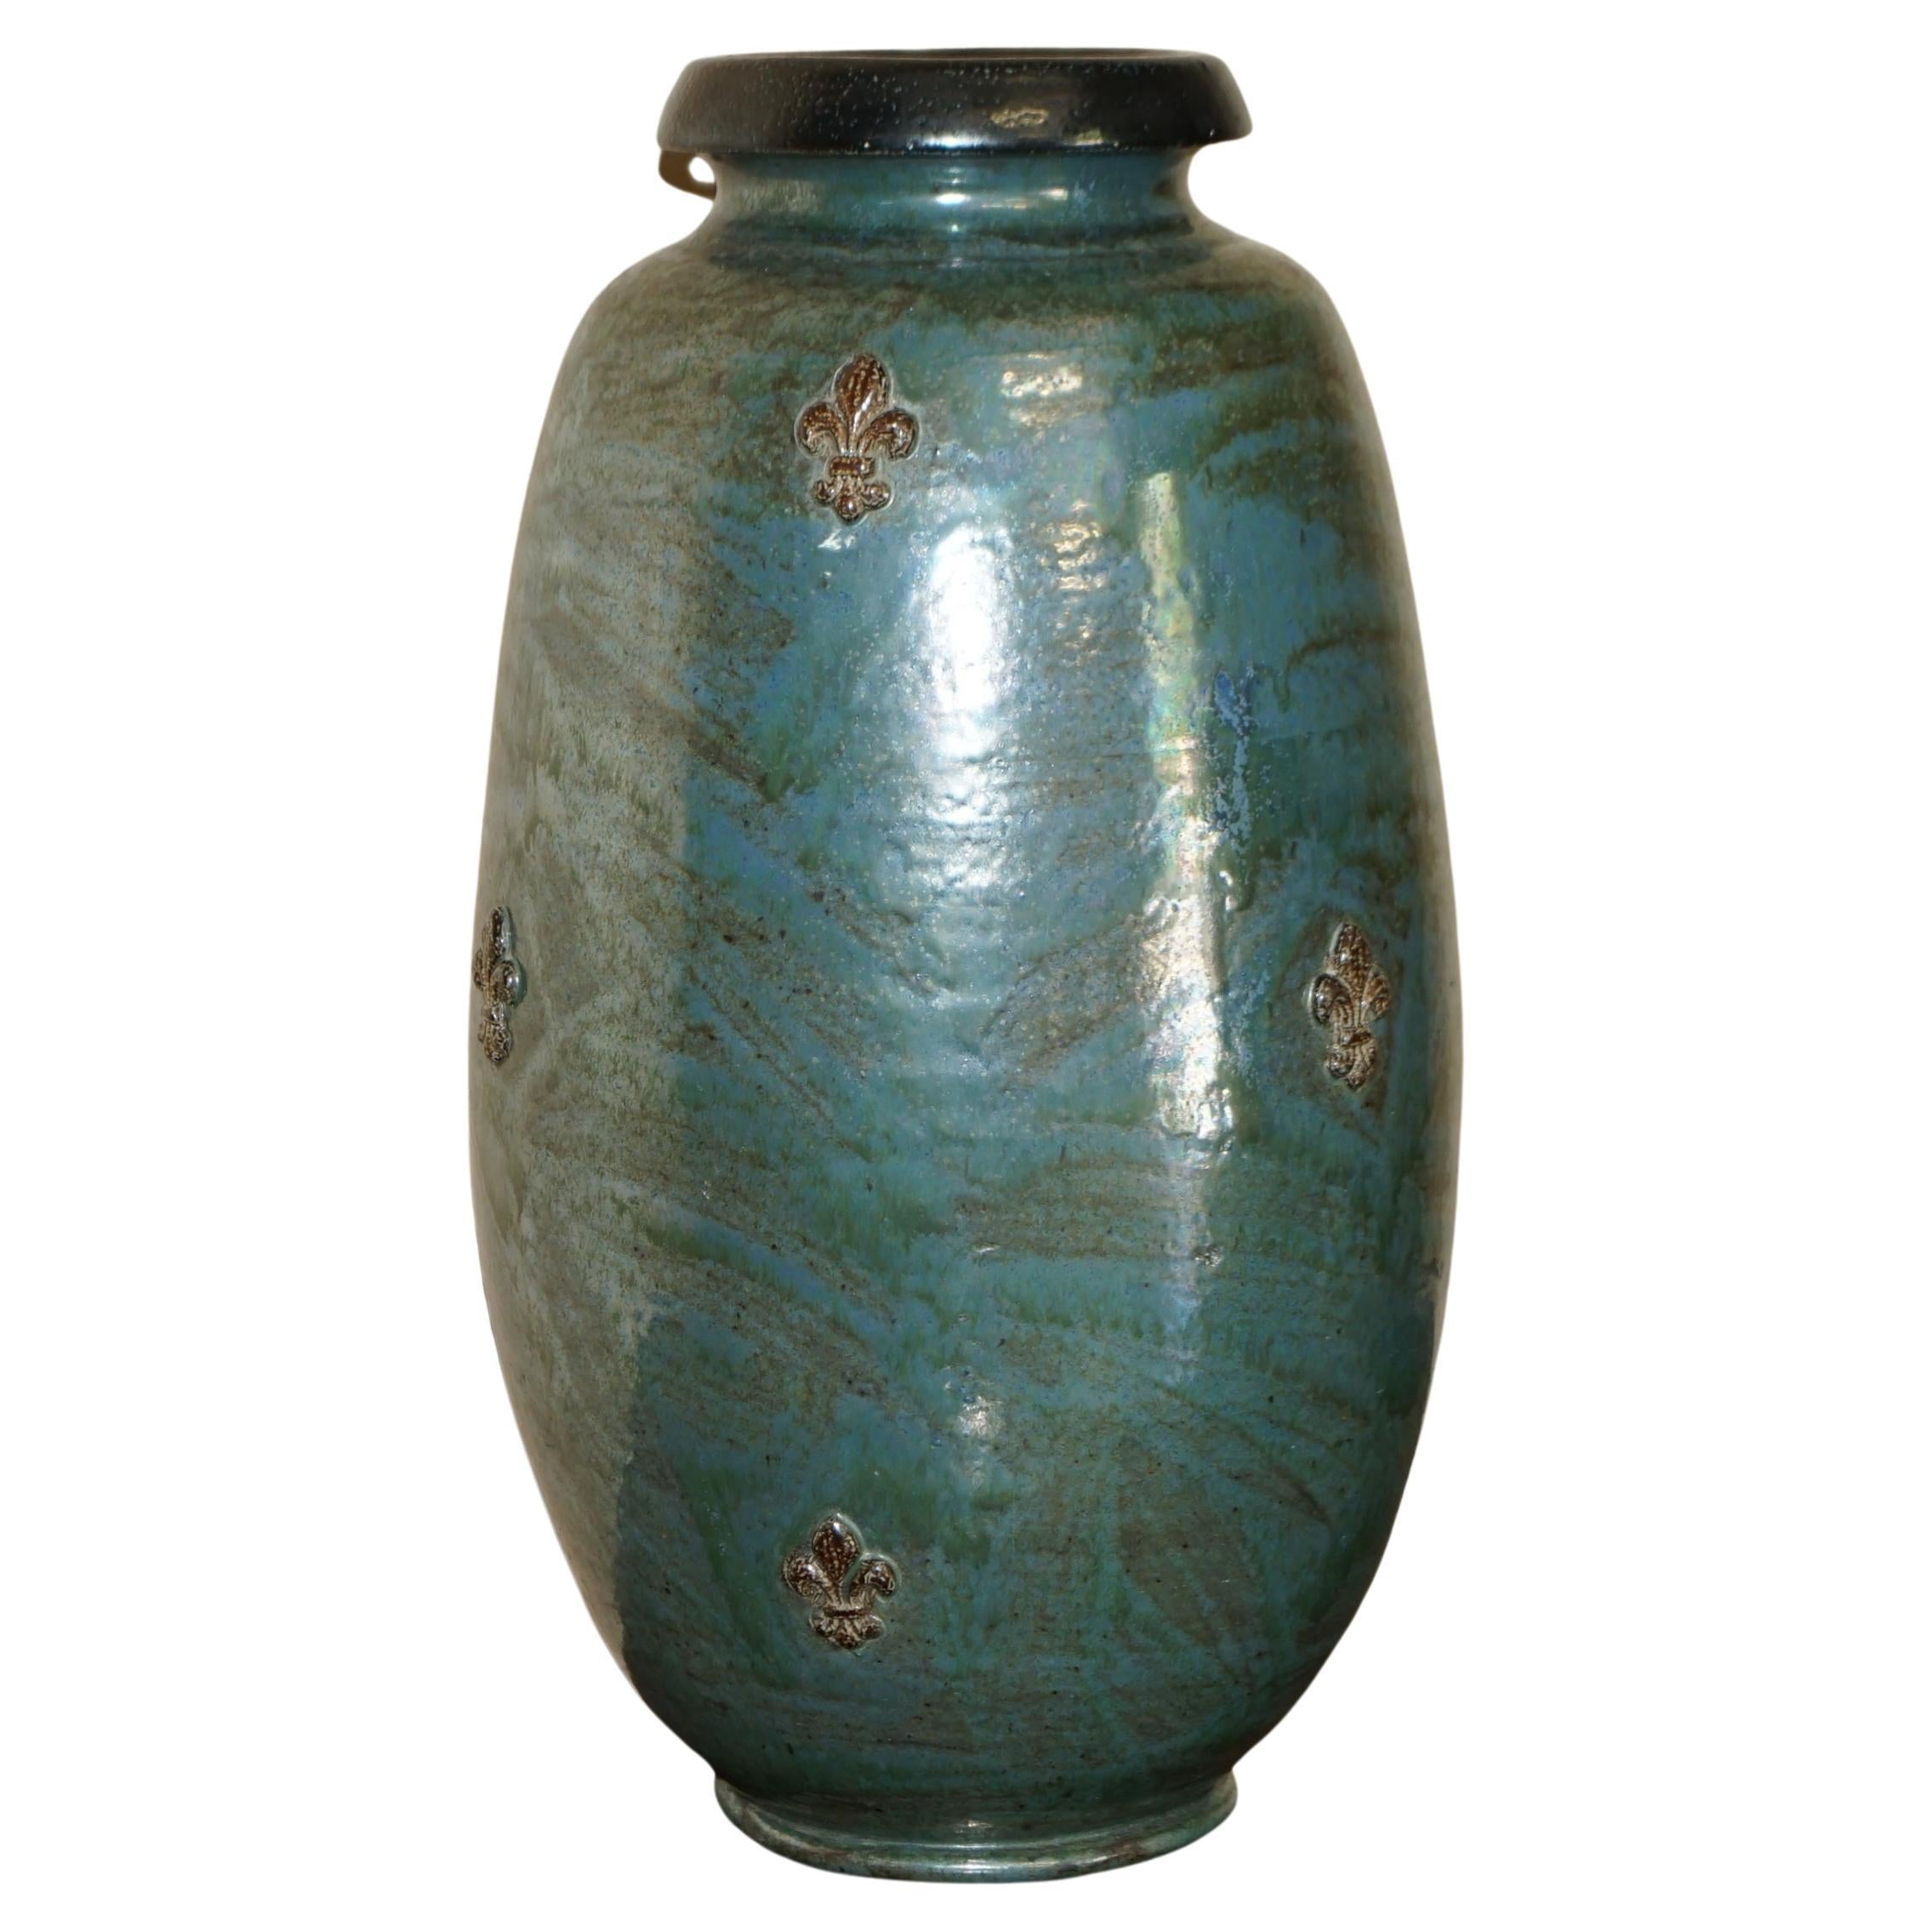 1 von 3 signiert Roger Guerin 1930 Fleur De Lis Keramik Steingut Keramik Vase Töpferwaren